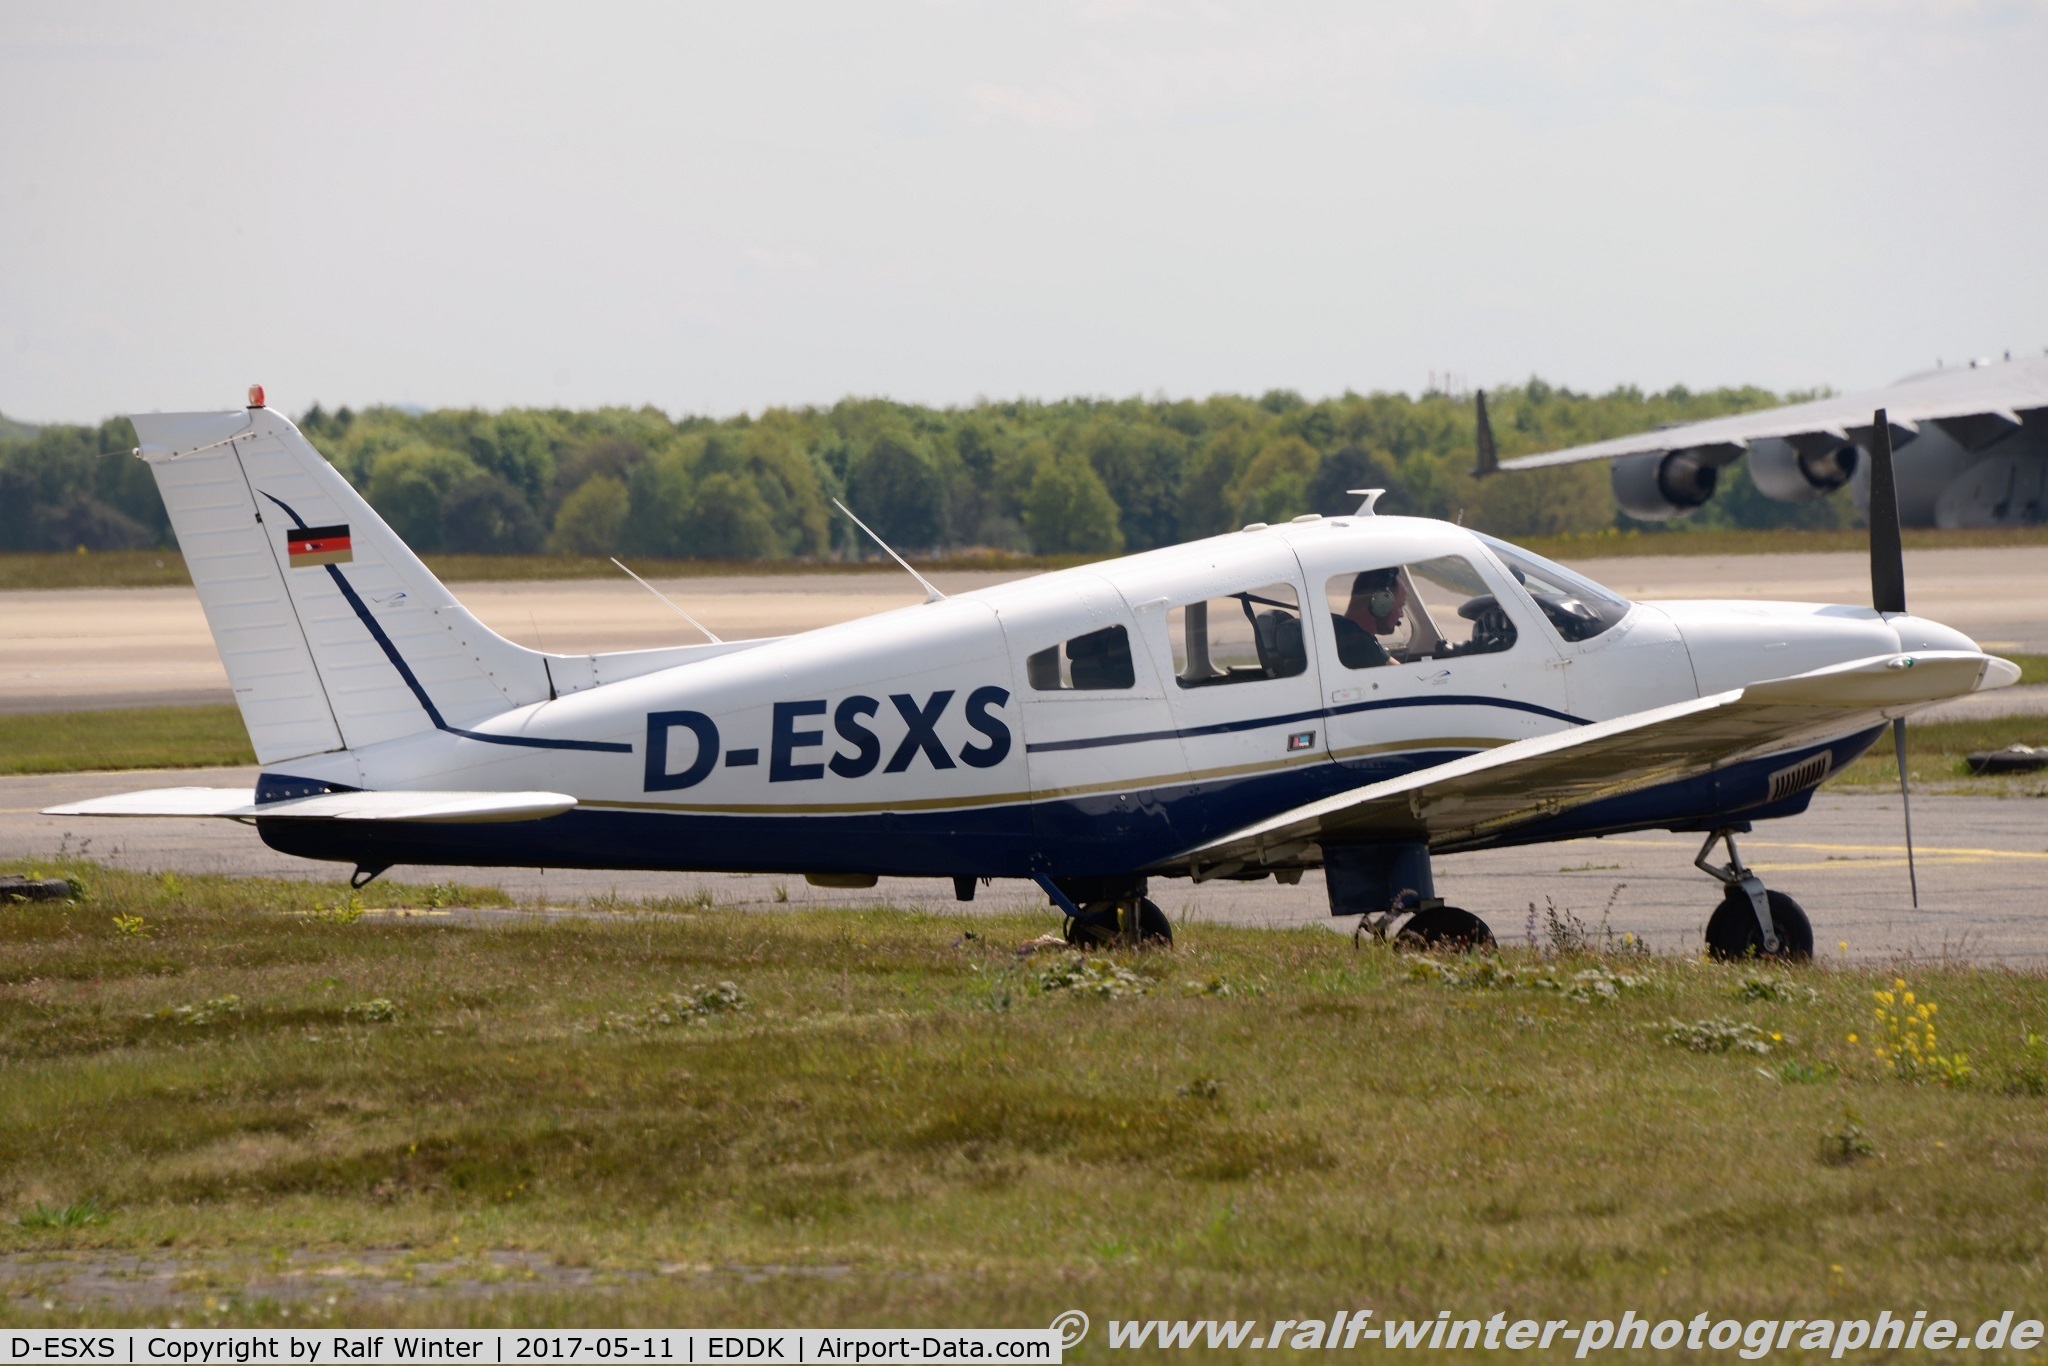 D-ESXS, 1979 Piper PA-28-181 Cherokee Archer II C/N 28-7990151, Piper PA-28-181 Cherokee Archer 2 - Private - 28-7990151 - D-ESXS - 11.05.2017 - CGN